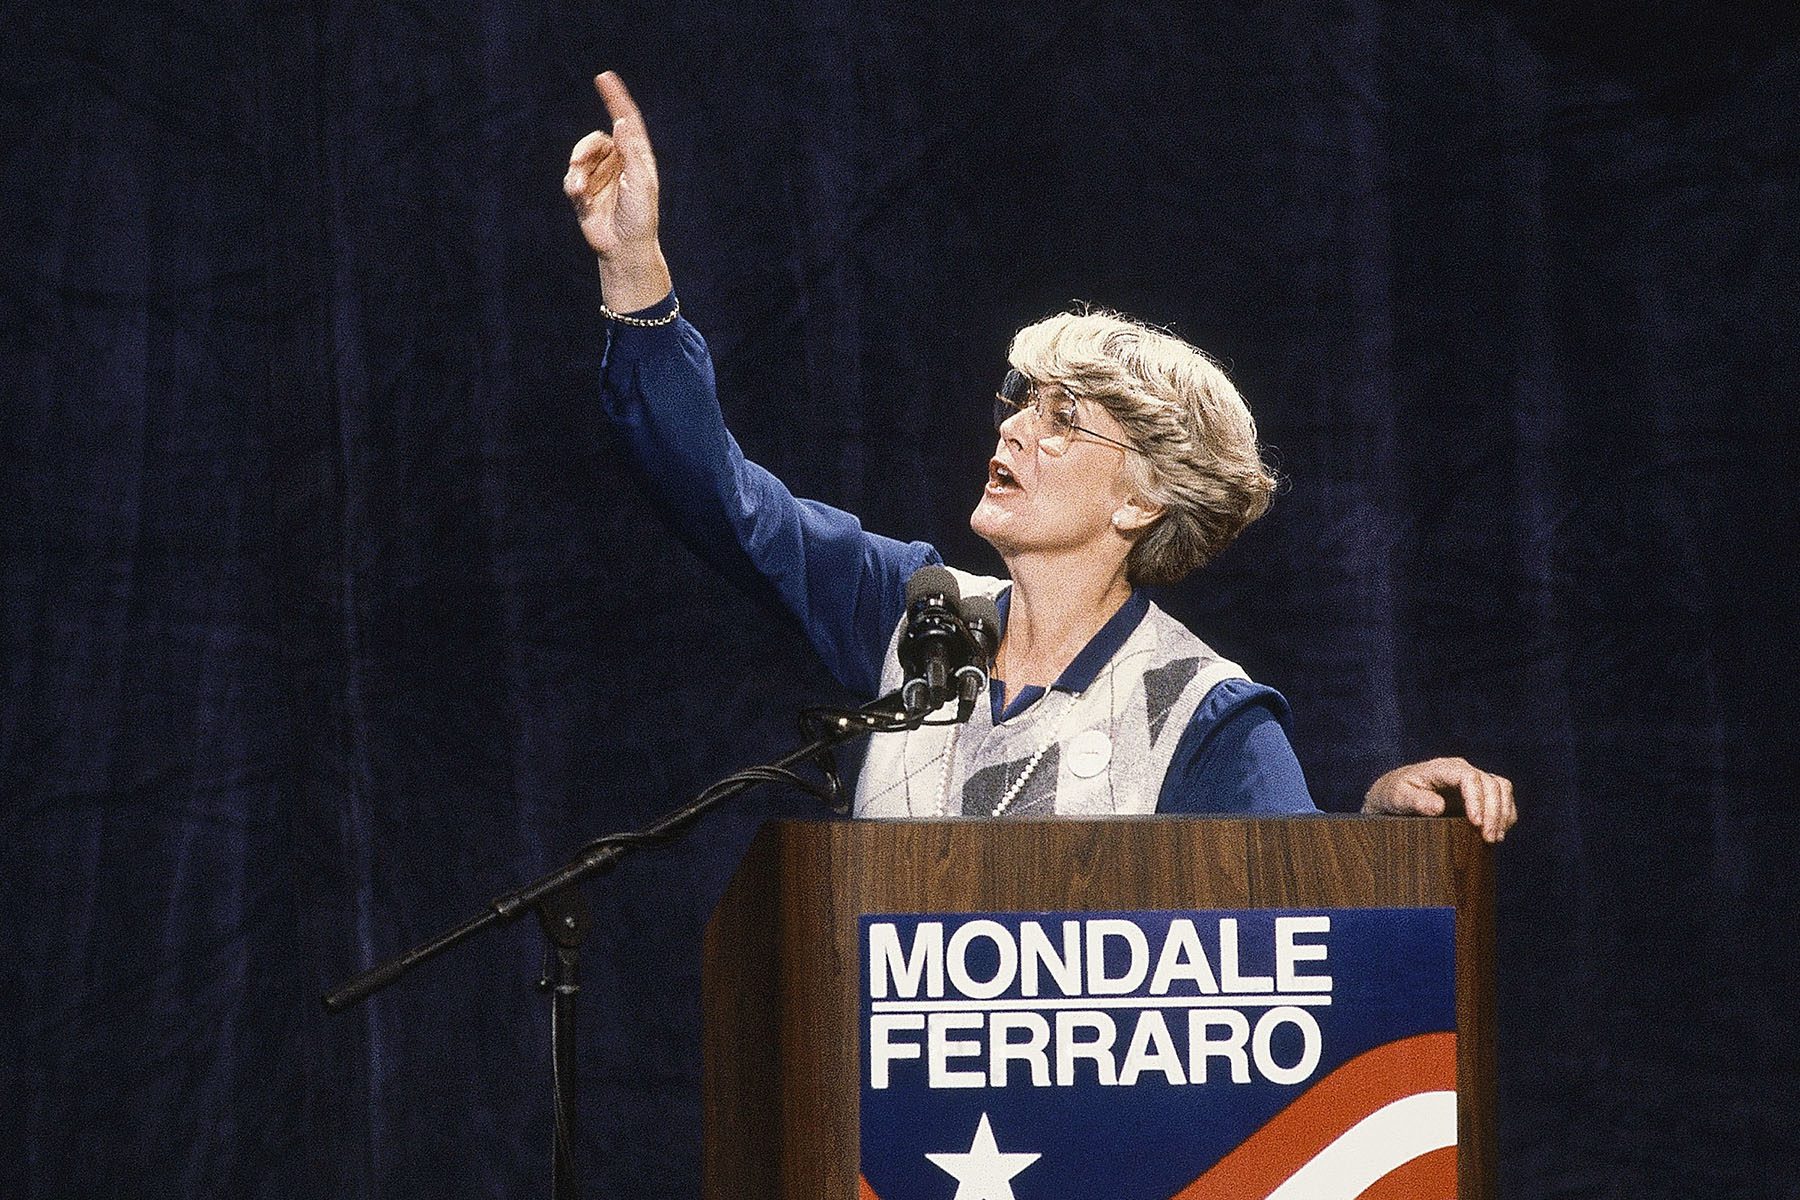 Geraldine Ferraro gives a speech on a podium during the Mondale Ferraro presidential campaign.